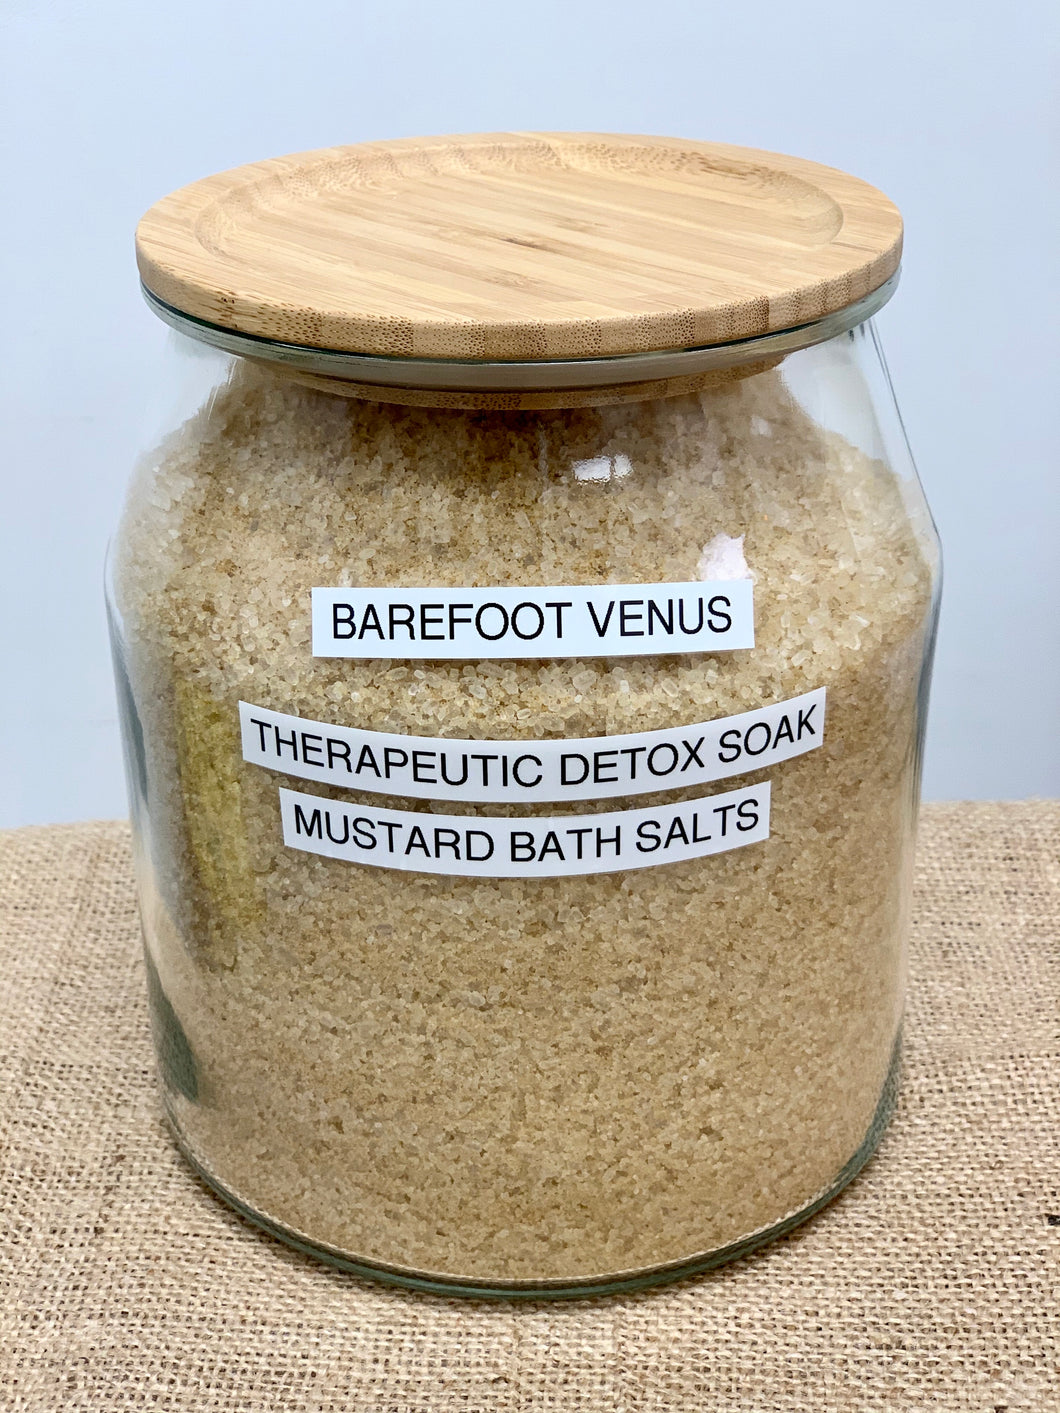 Mustard Bath Salts by Barefoot Venus - 10g BULK (#306)